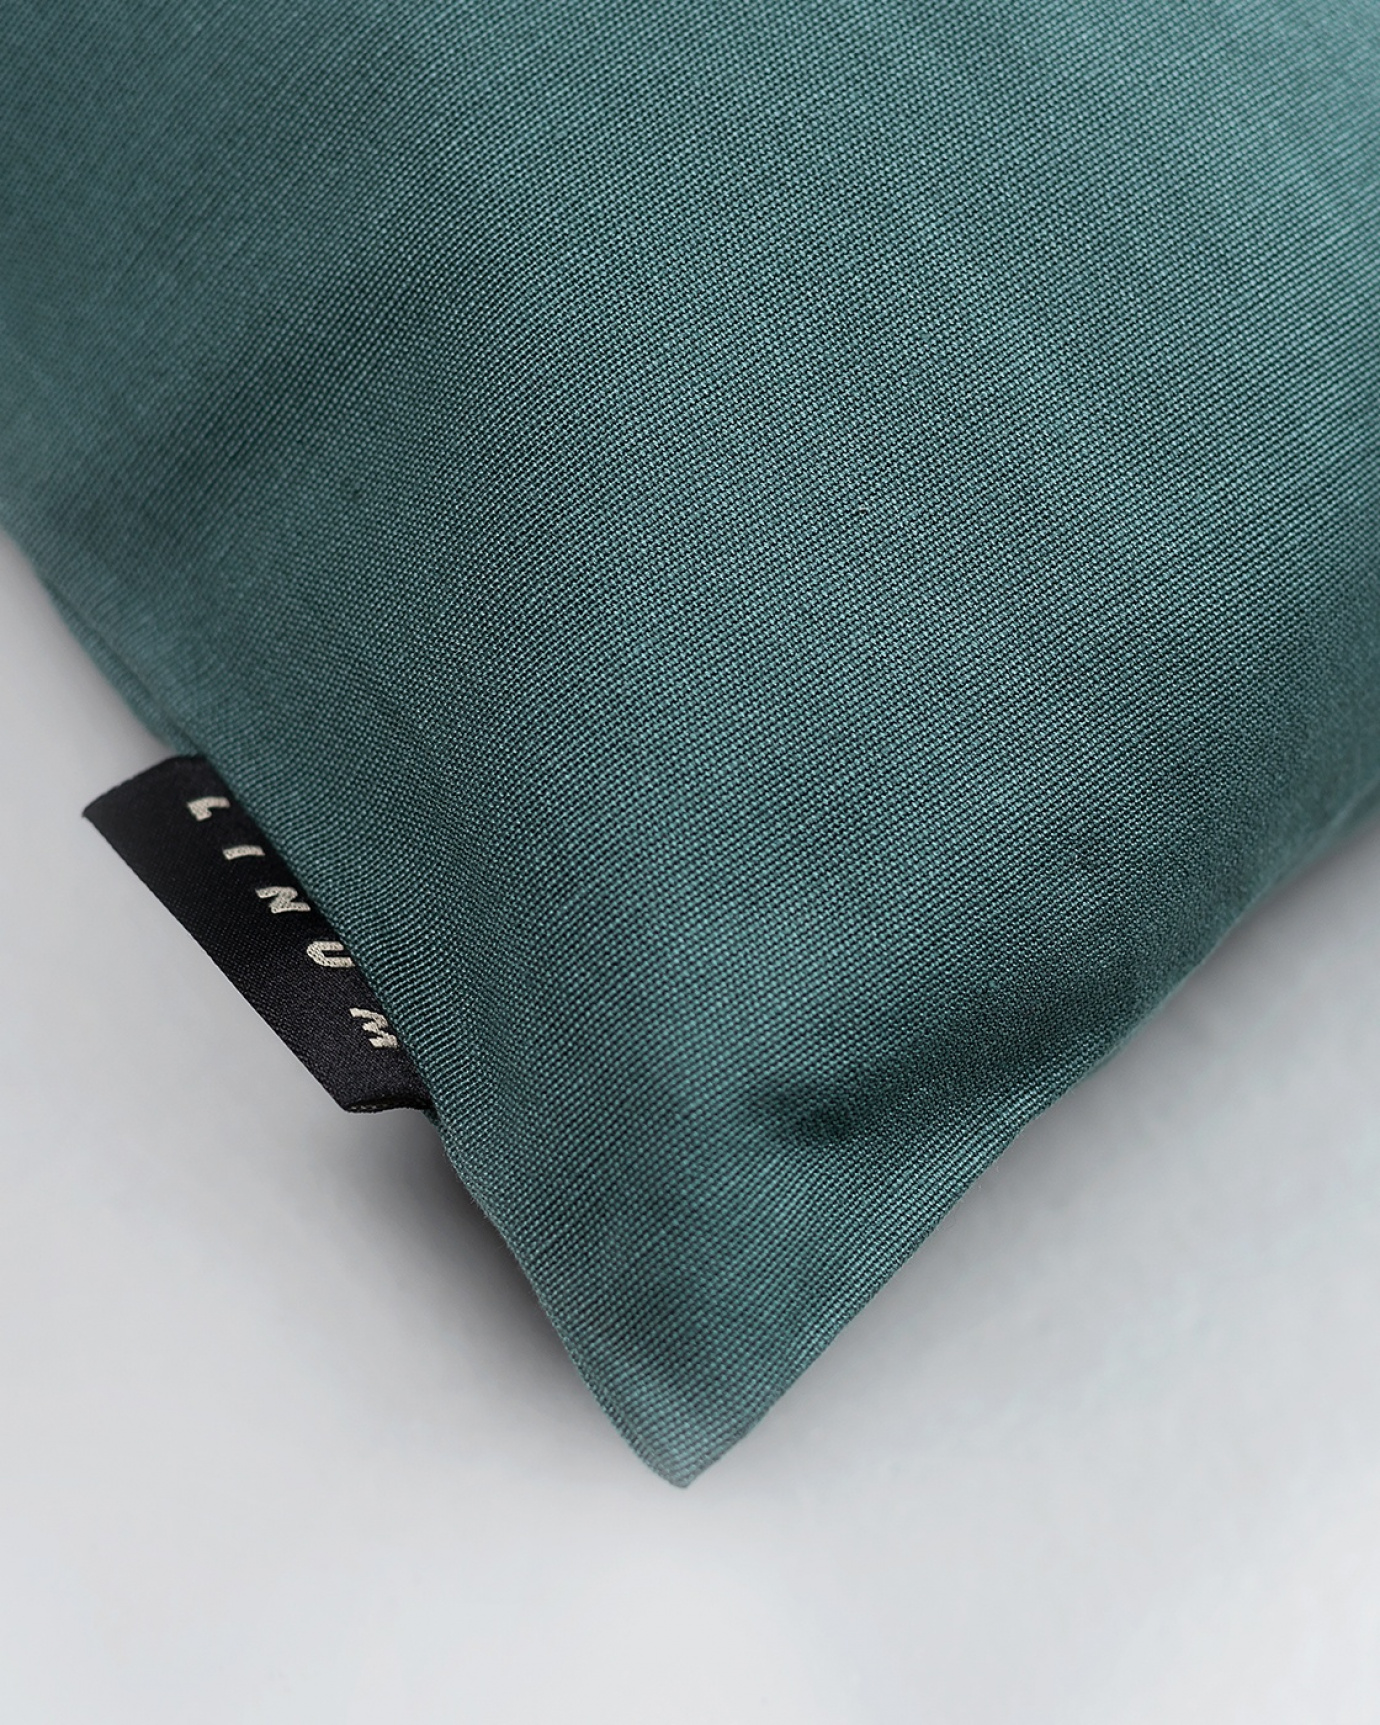 ANNABELL Cushion cover 40x40 cm Dark grey turquoise, bild 2 